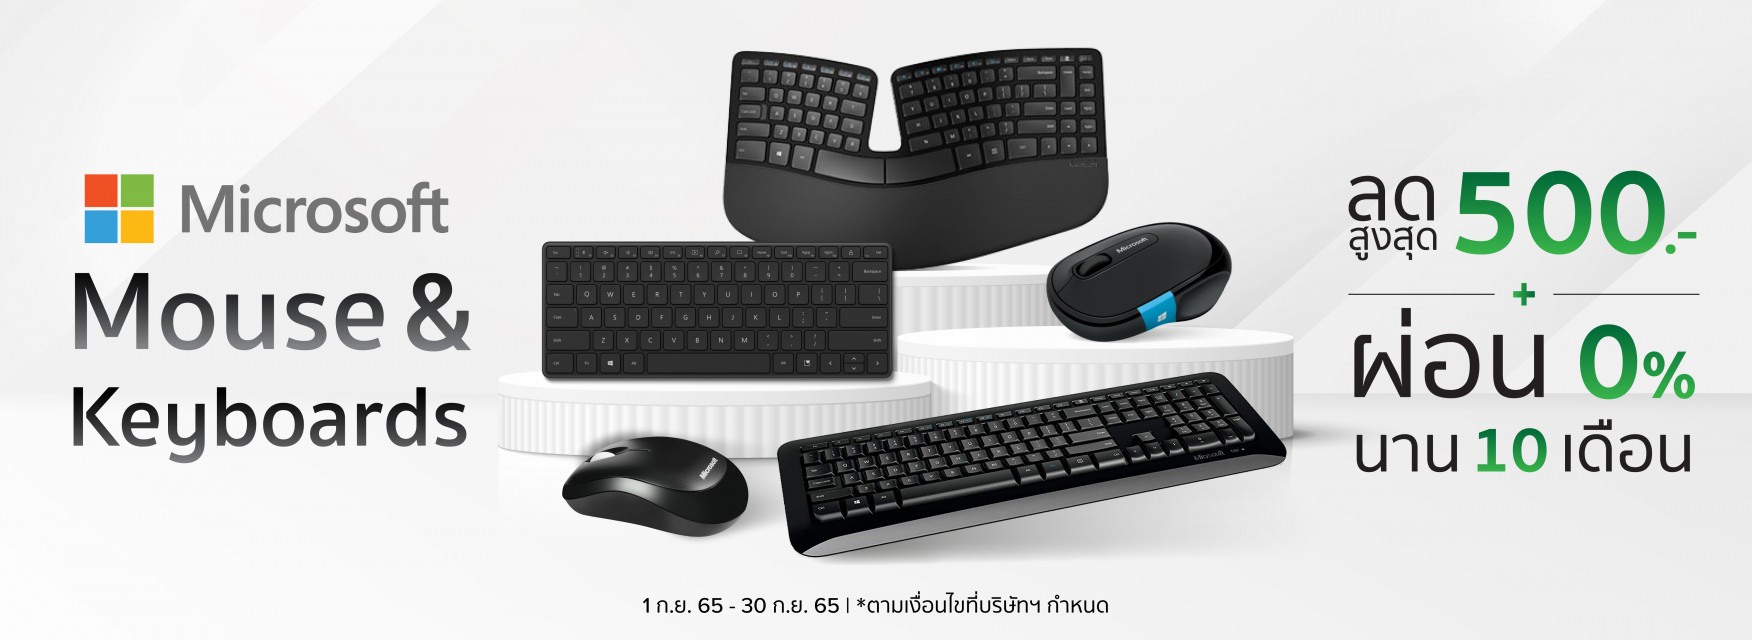 Microsoft Mouse & Keyboard ไร้สายสบายกระเป๋า